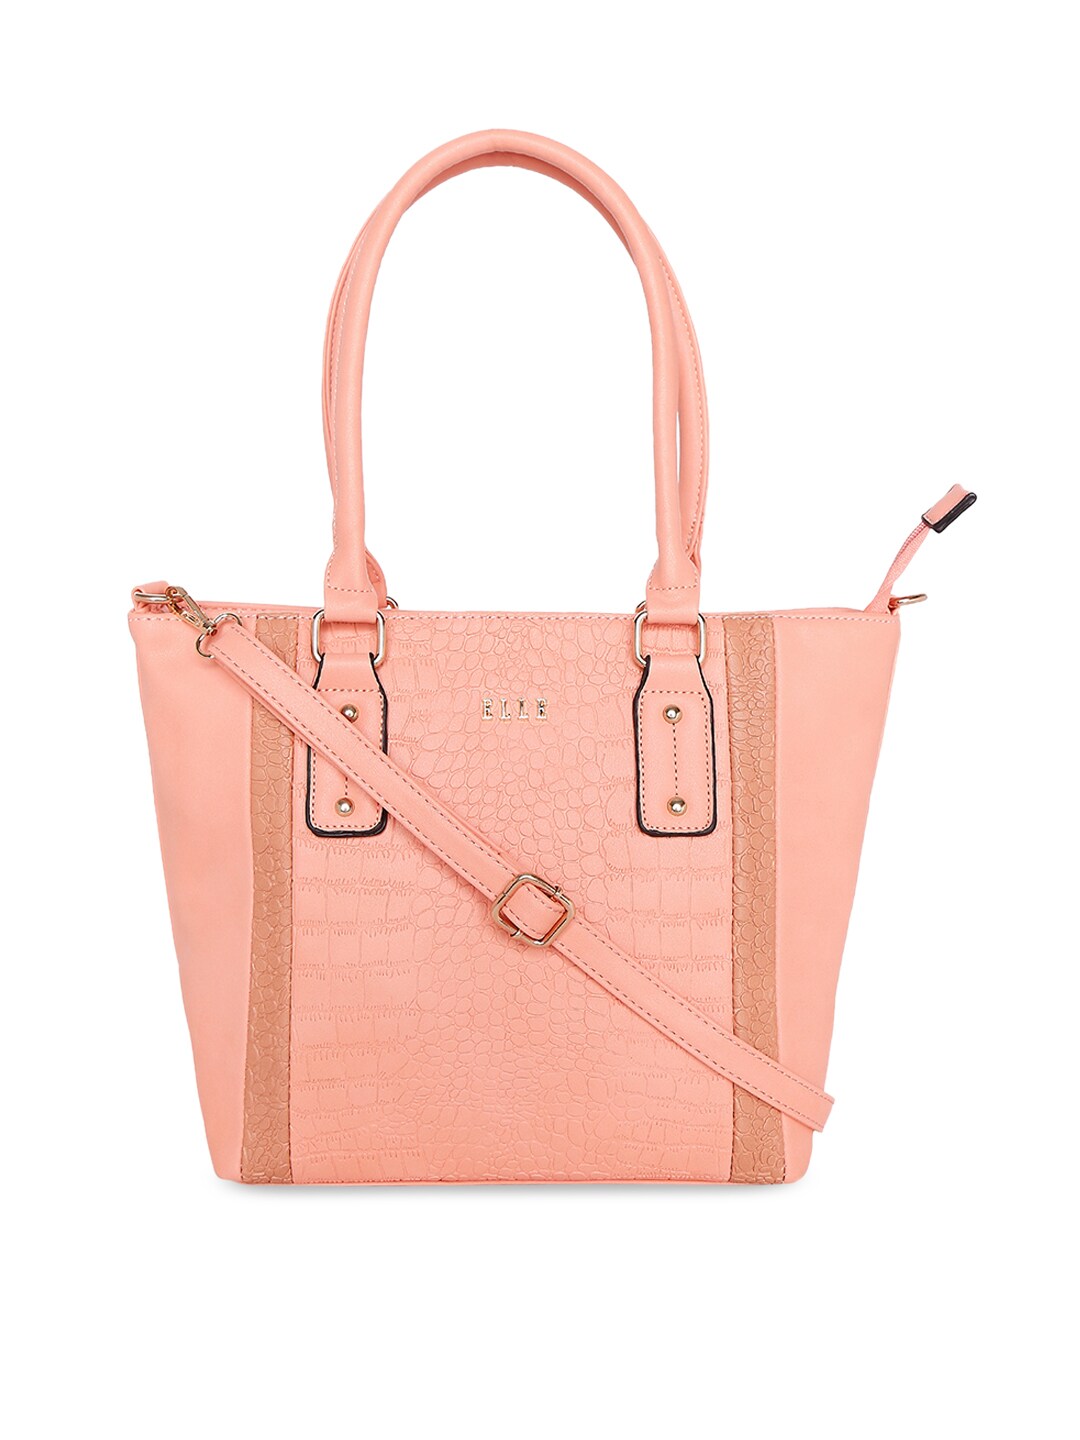 ELLE Peach-Coloured Textured Shoulder Bag Price in India